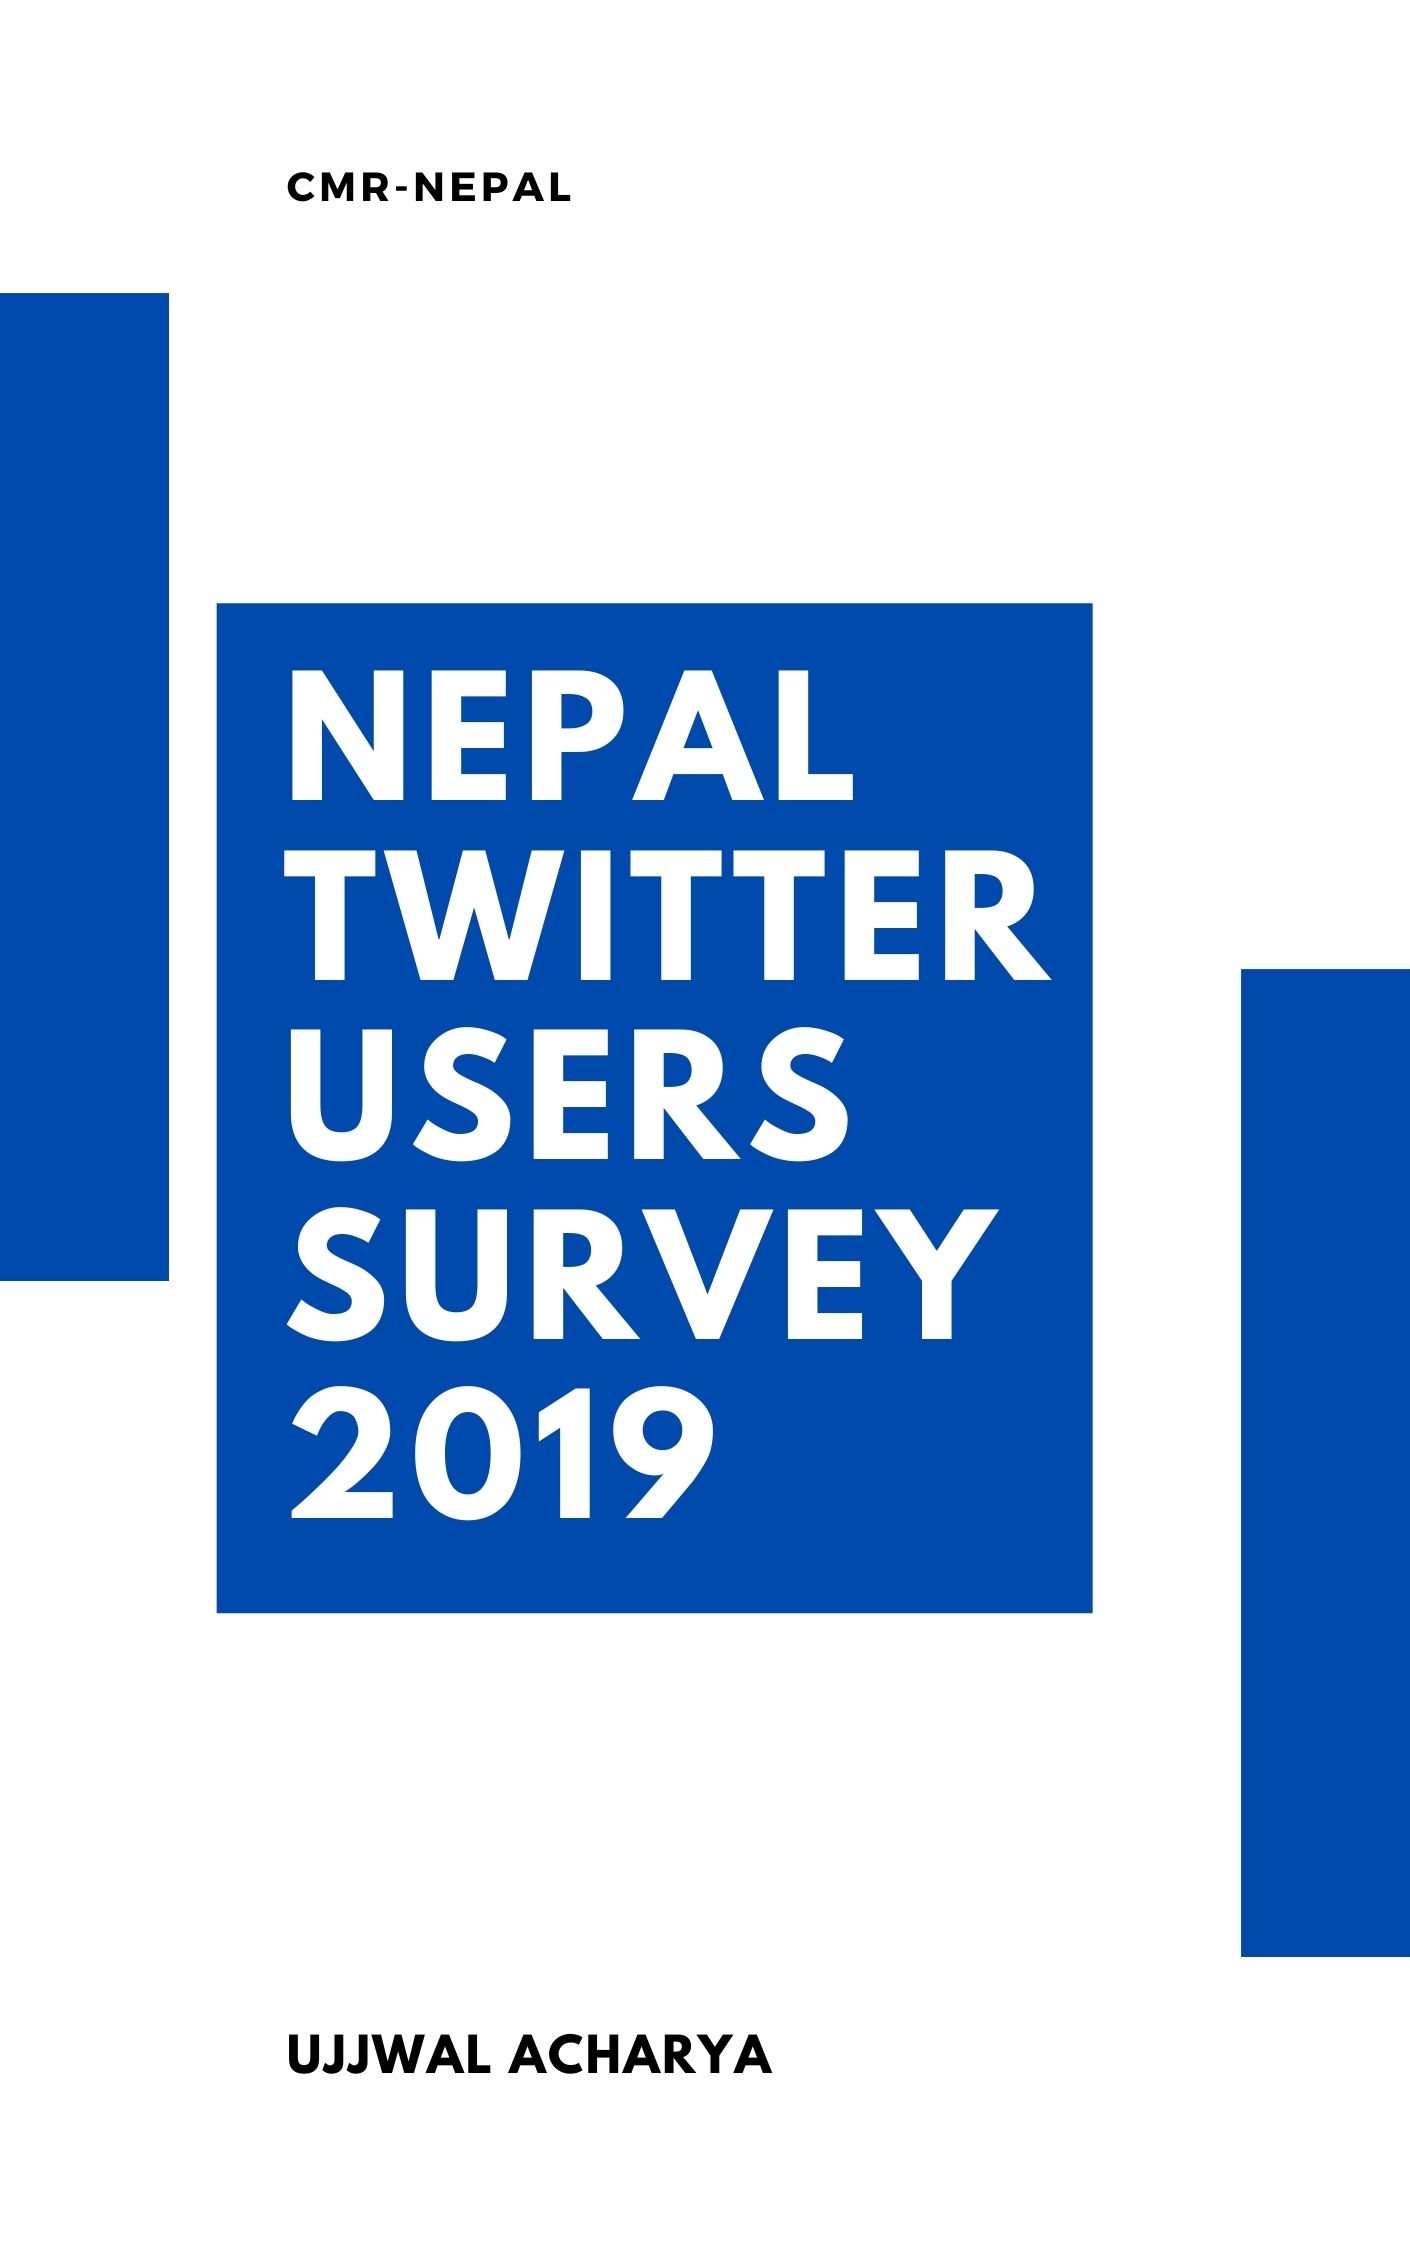 Nepal Twitter Users Survey 2019